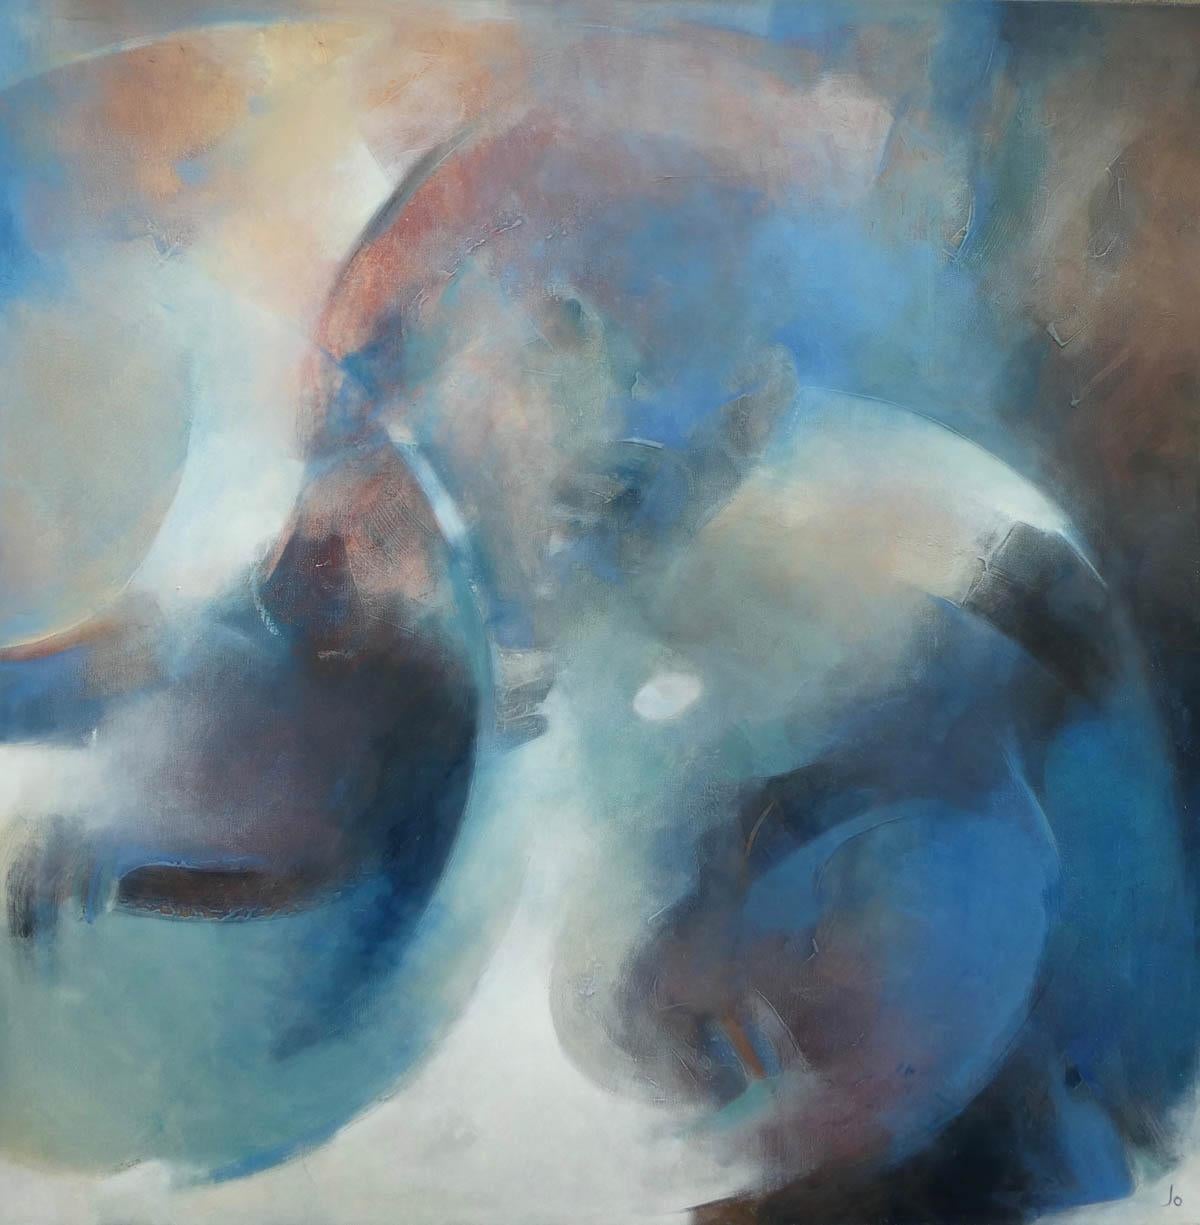 Abstract Painting Jo Jenkins - Mersey Bottom par JO JENKINS, Art bleu, peinture contemporaine originale, BrightArt